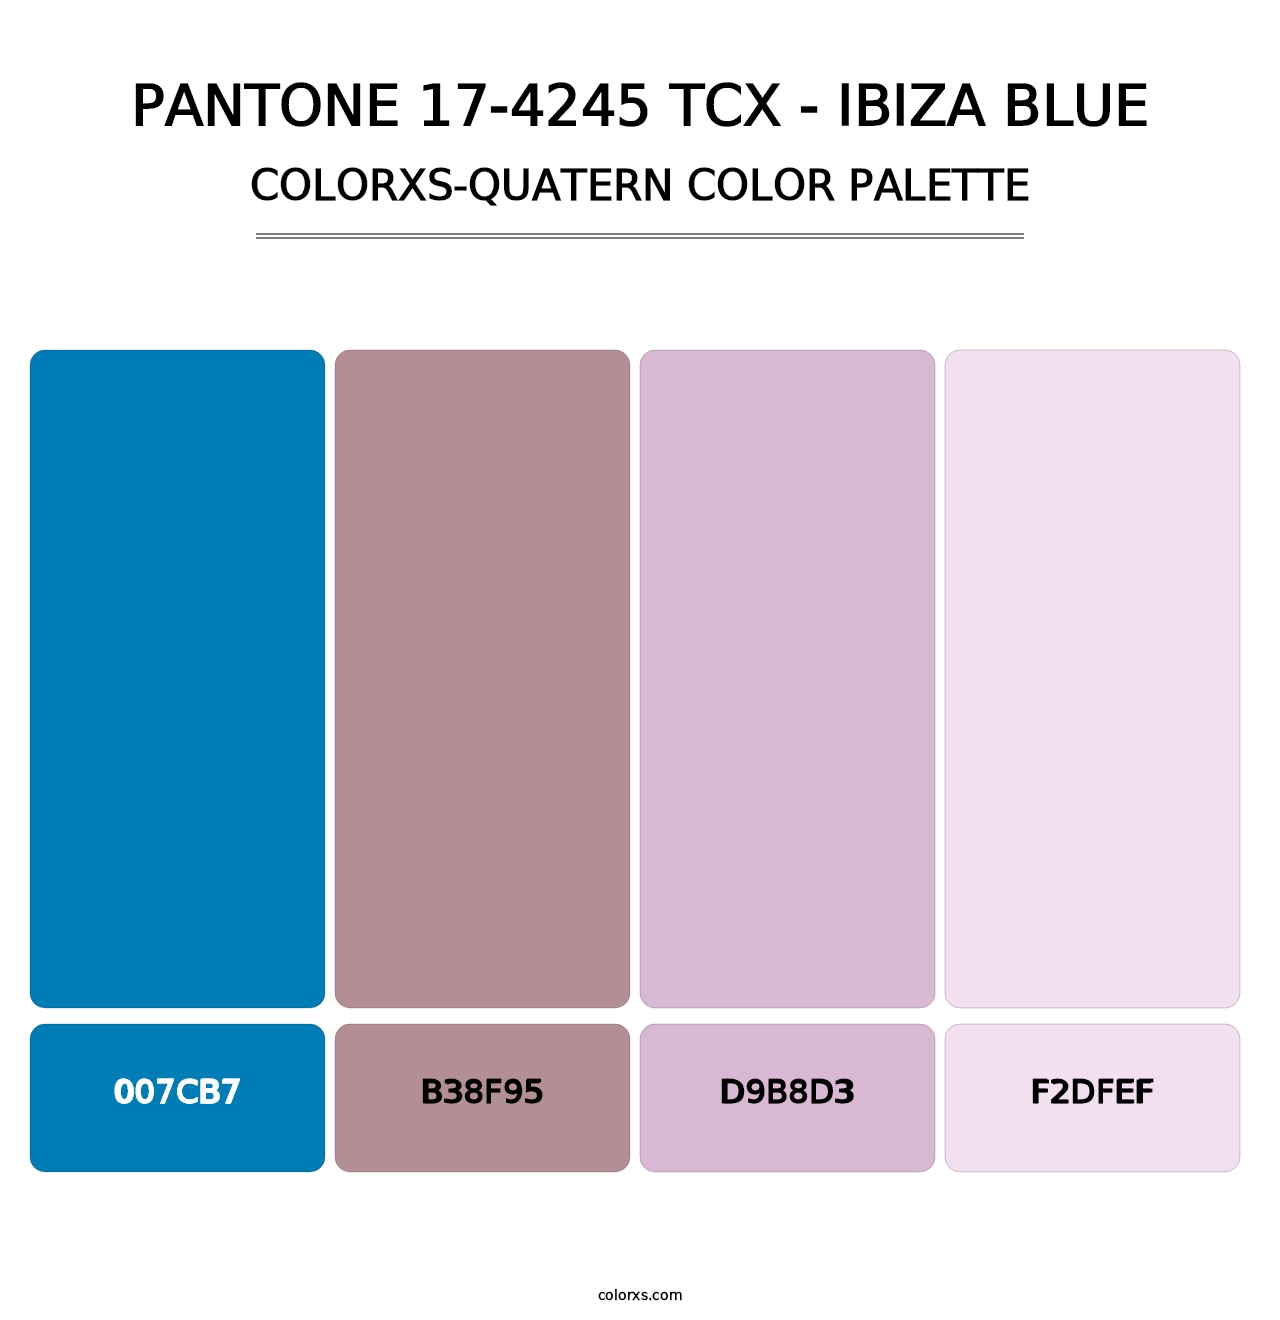 PANTONE 17-4245 TCX - Ibiza Blue - Colorxs Quatern Palette